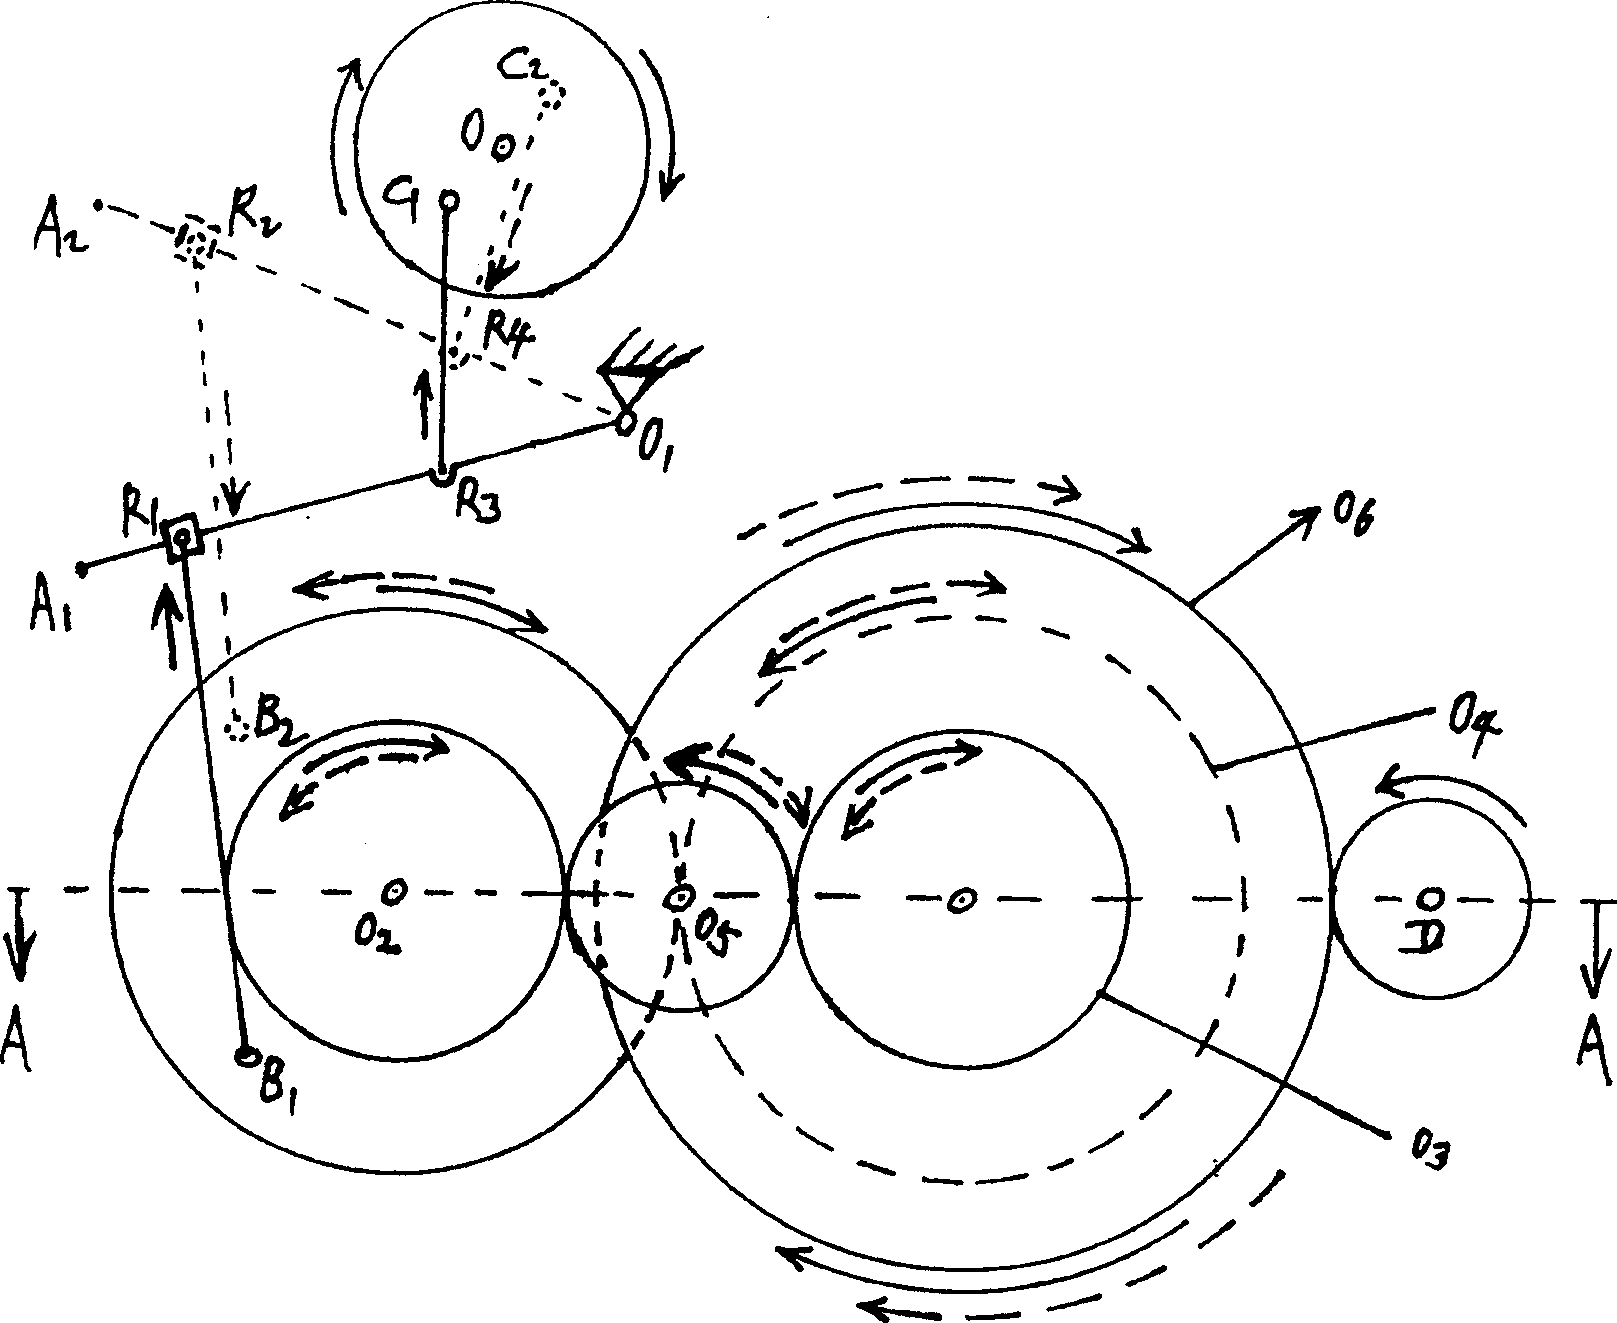 Non-shift telescoping-radius one-way transmission